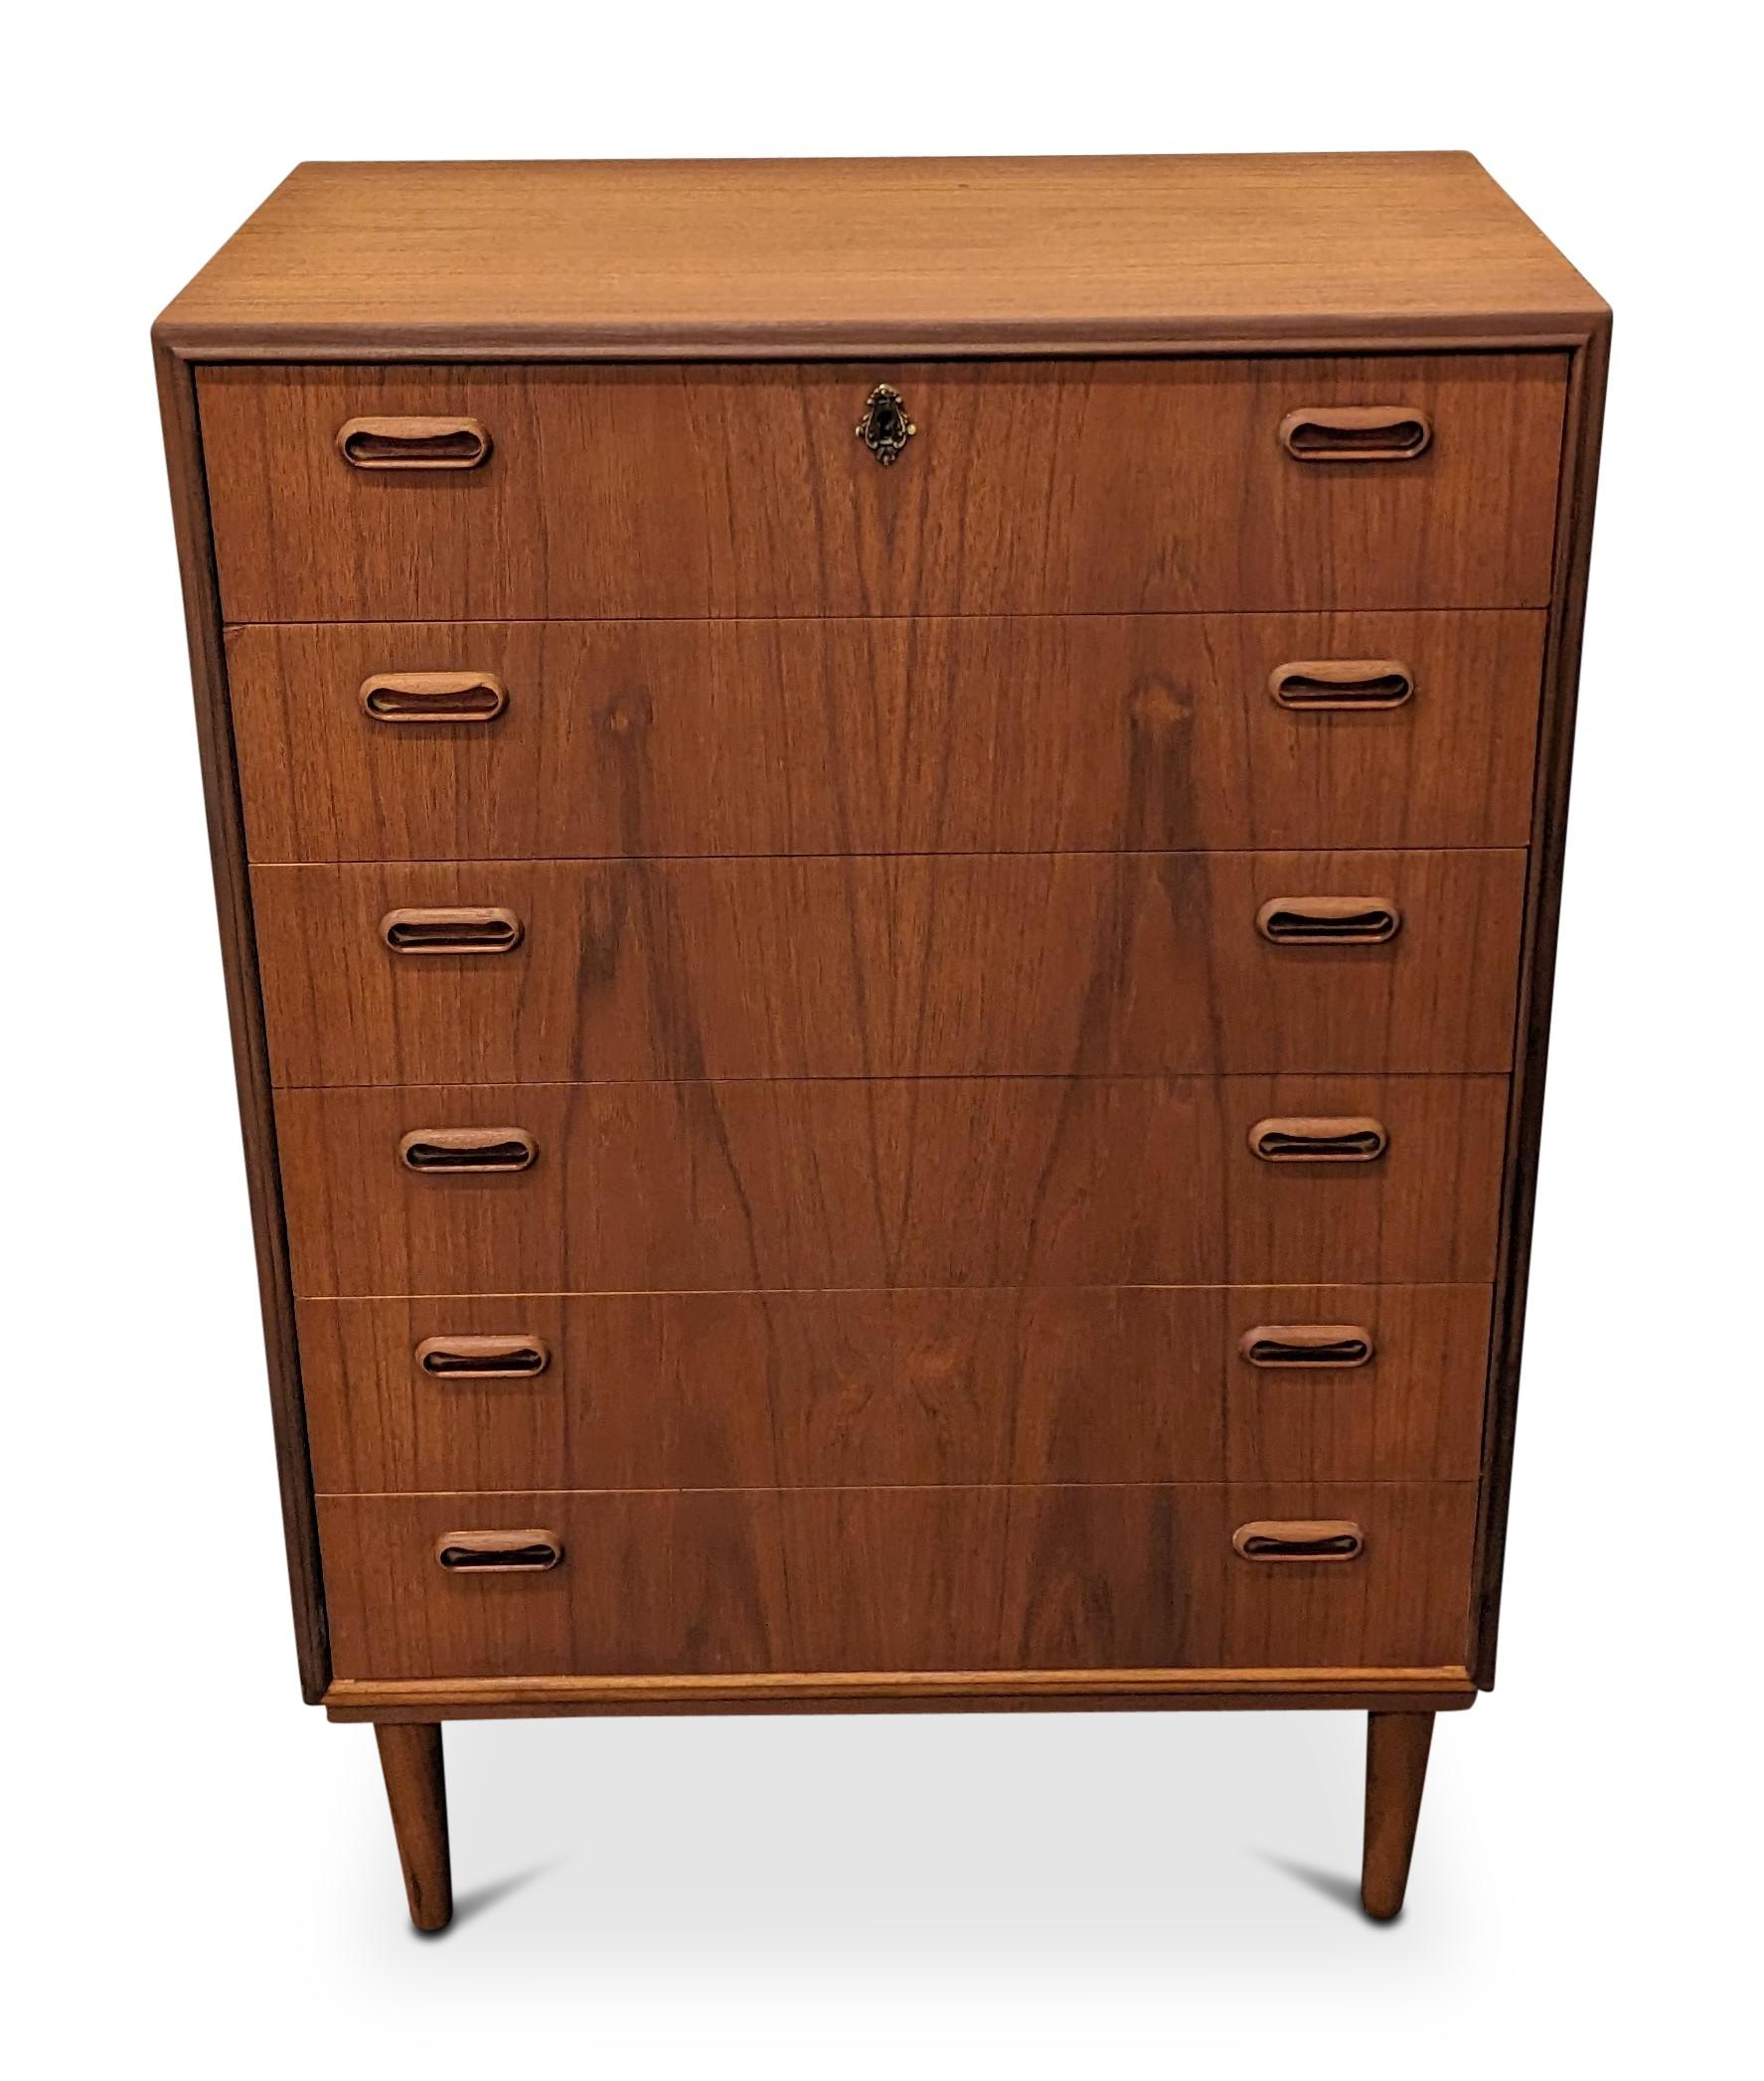 Vintage Danish Mid century Teak Dresser - 122373 In Good Condition For Sale In Jersey City, NJ